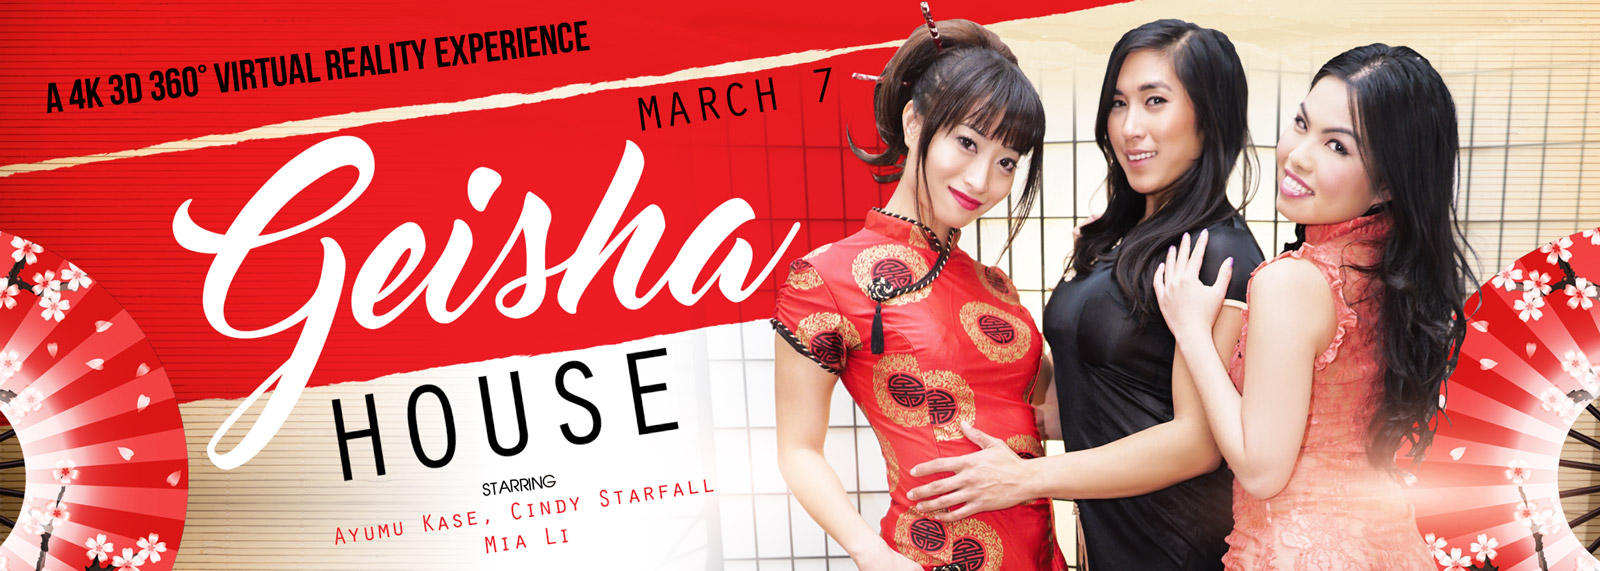 VRB Geisha House with Mia Li  Slideshow